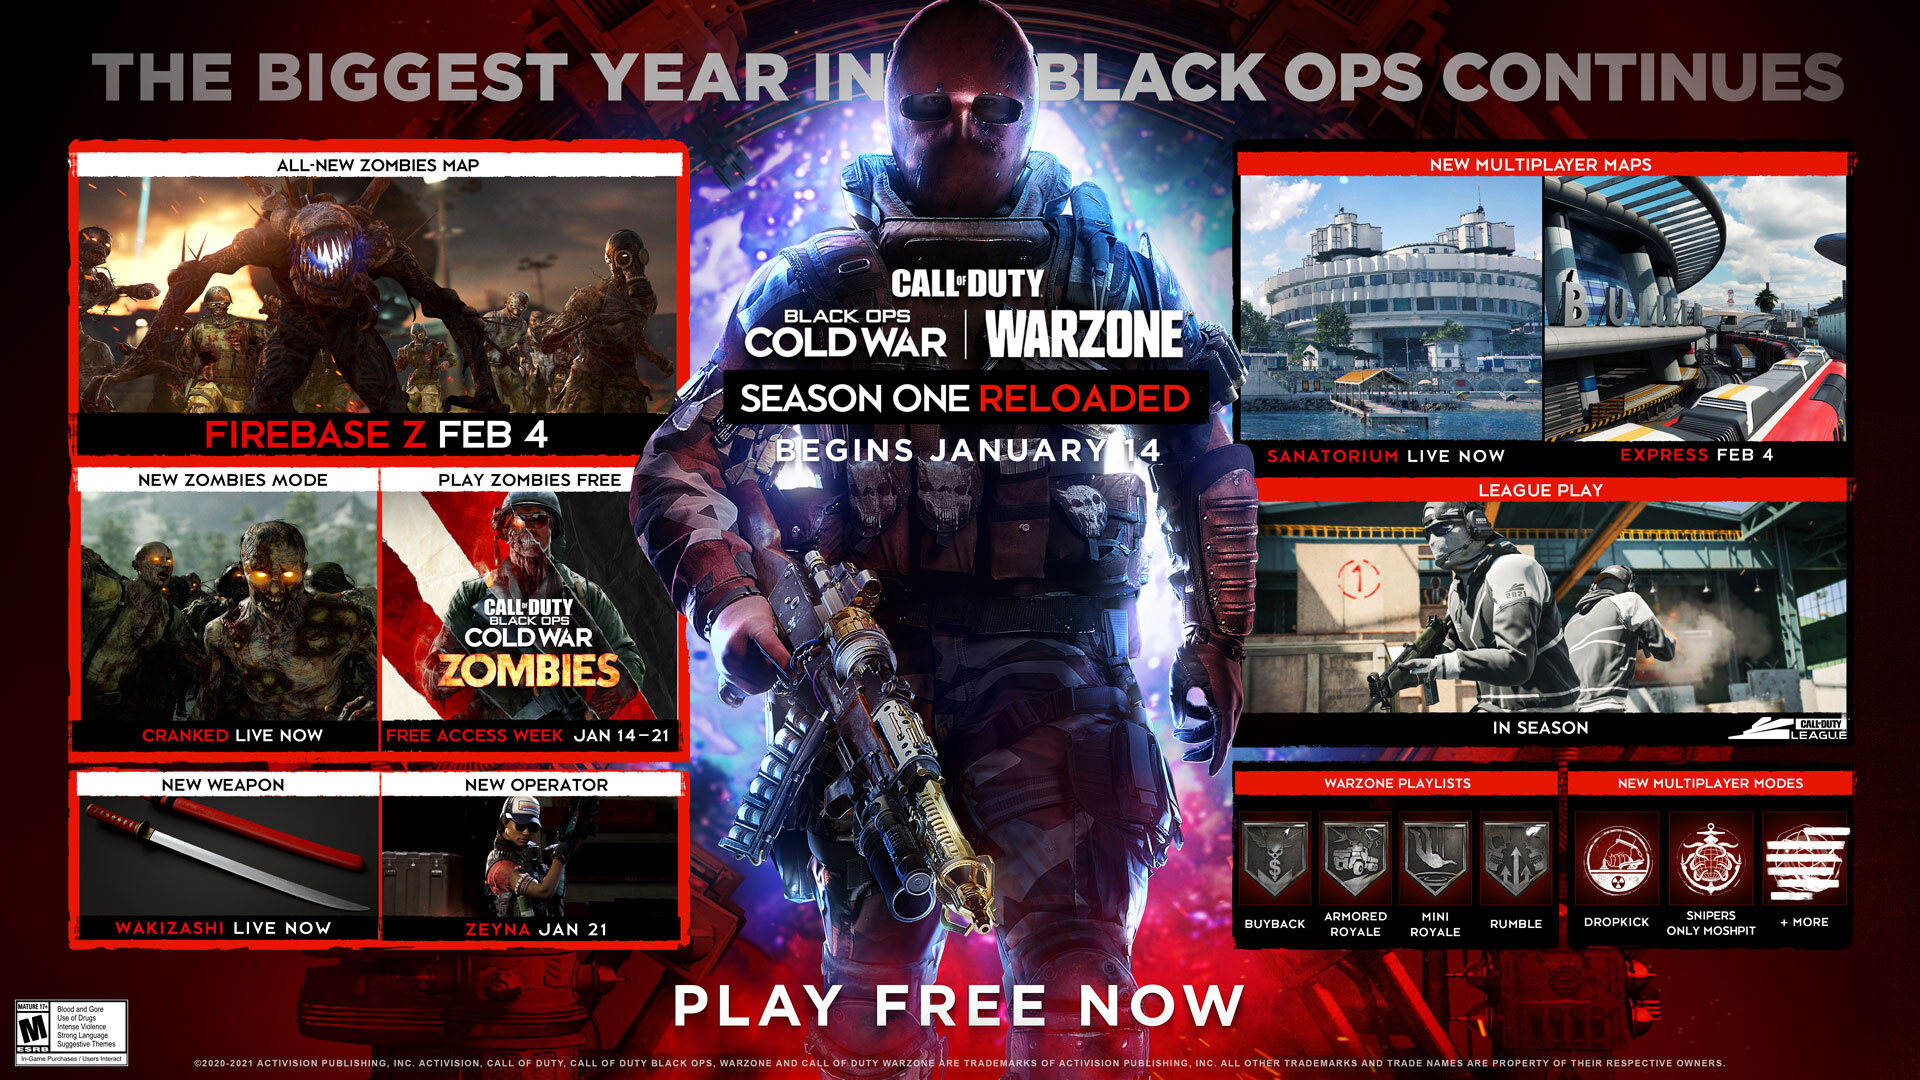 Call of Duty Black Ops Cold War Season One reloaded roadmap Schedule